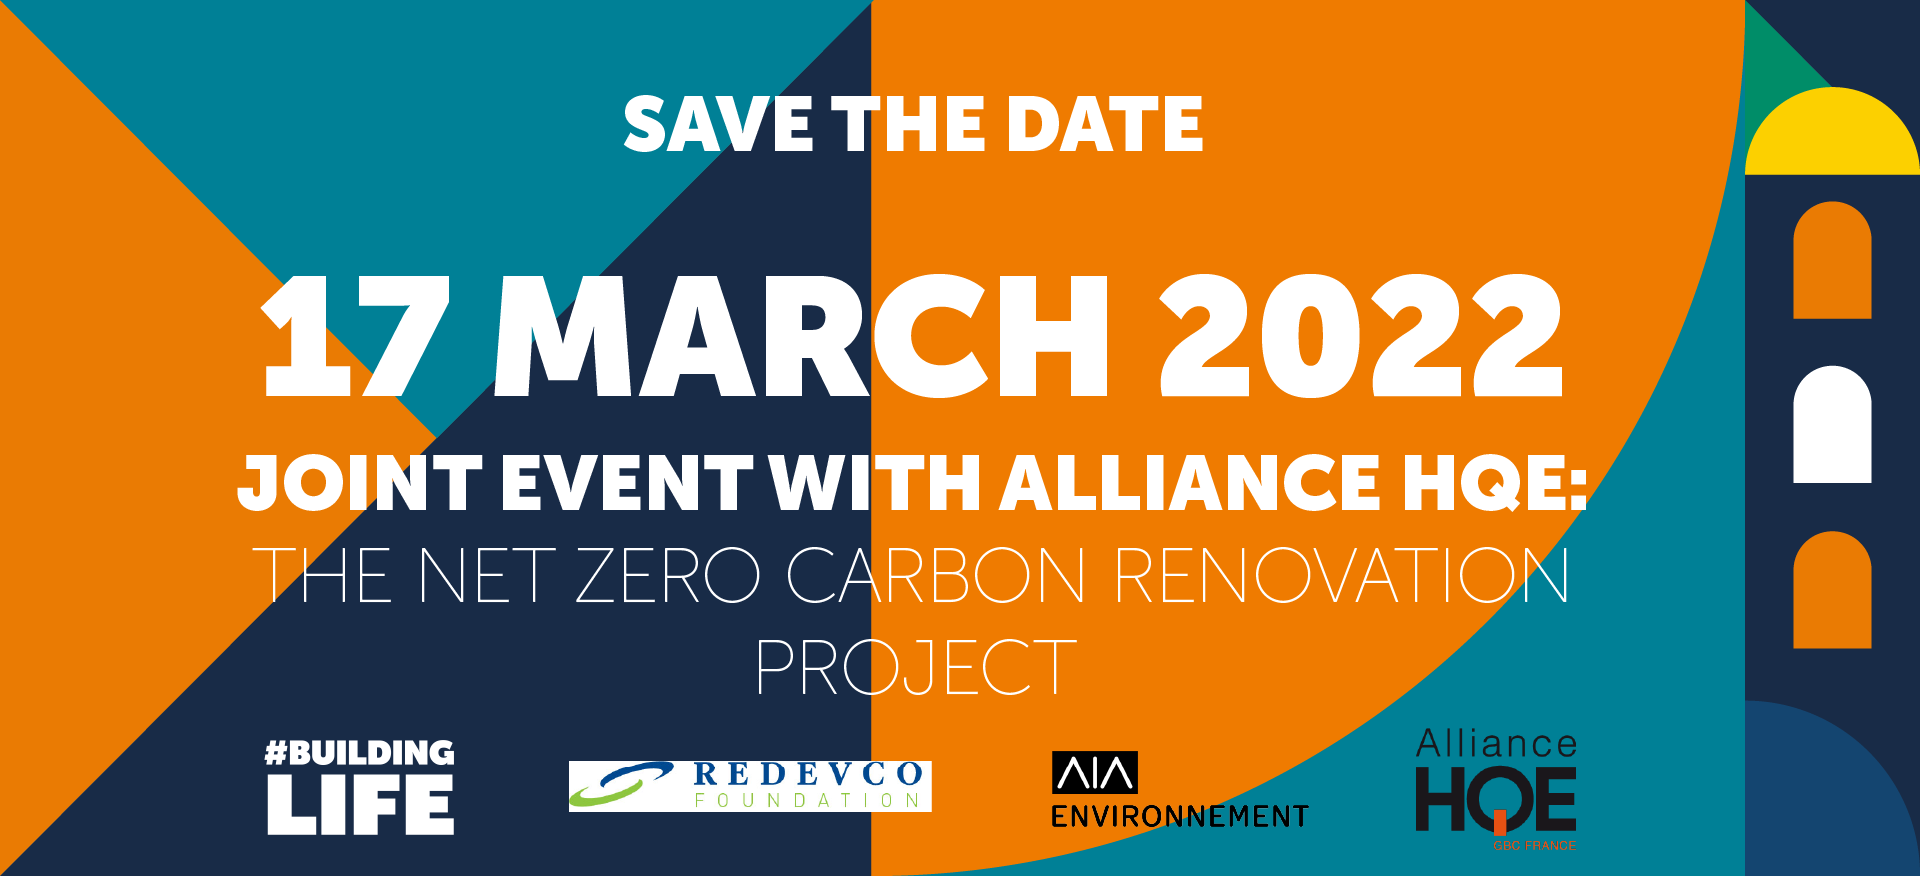 #BuildingLife webinar: The Alliance HQE Net Zero Carbon Renovation project